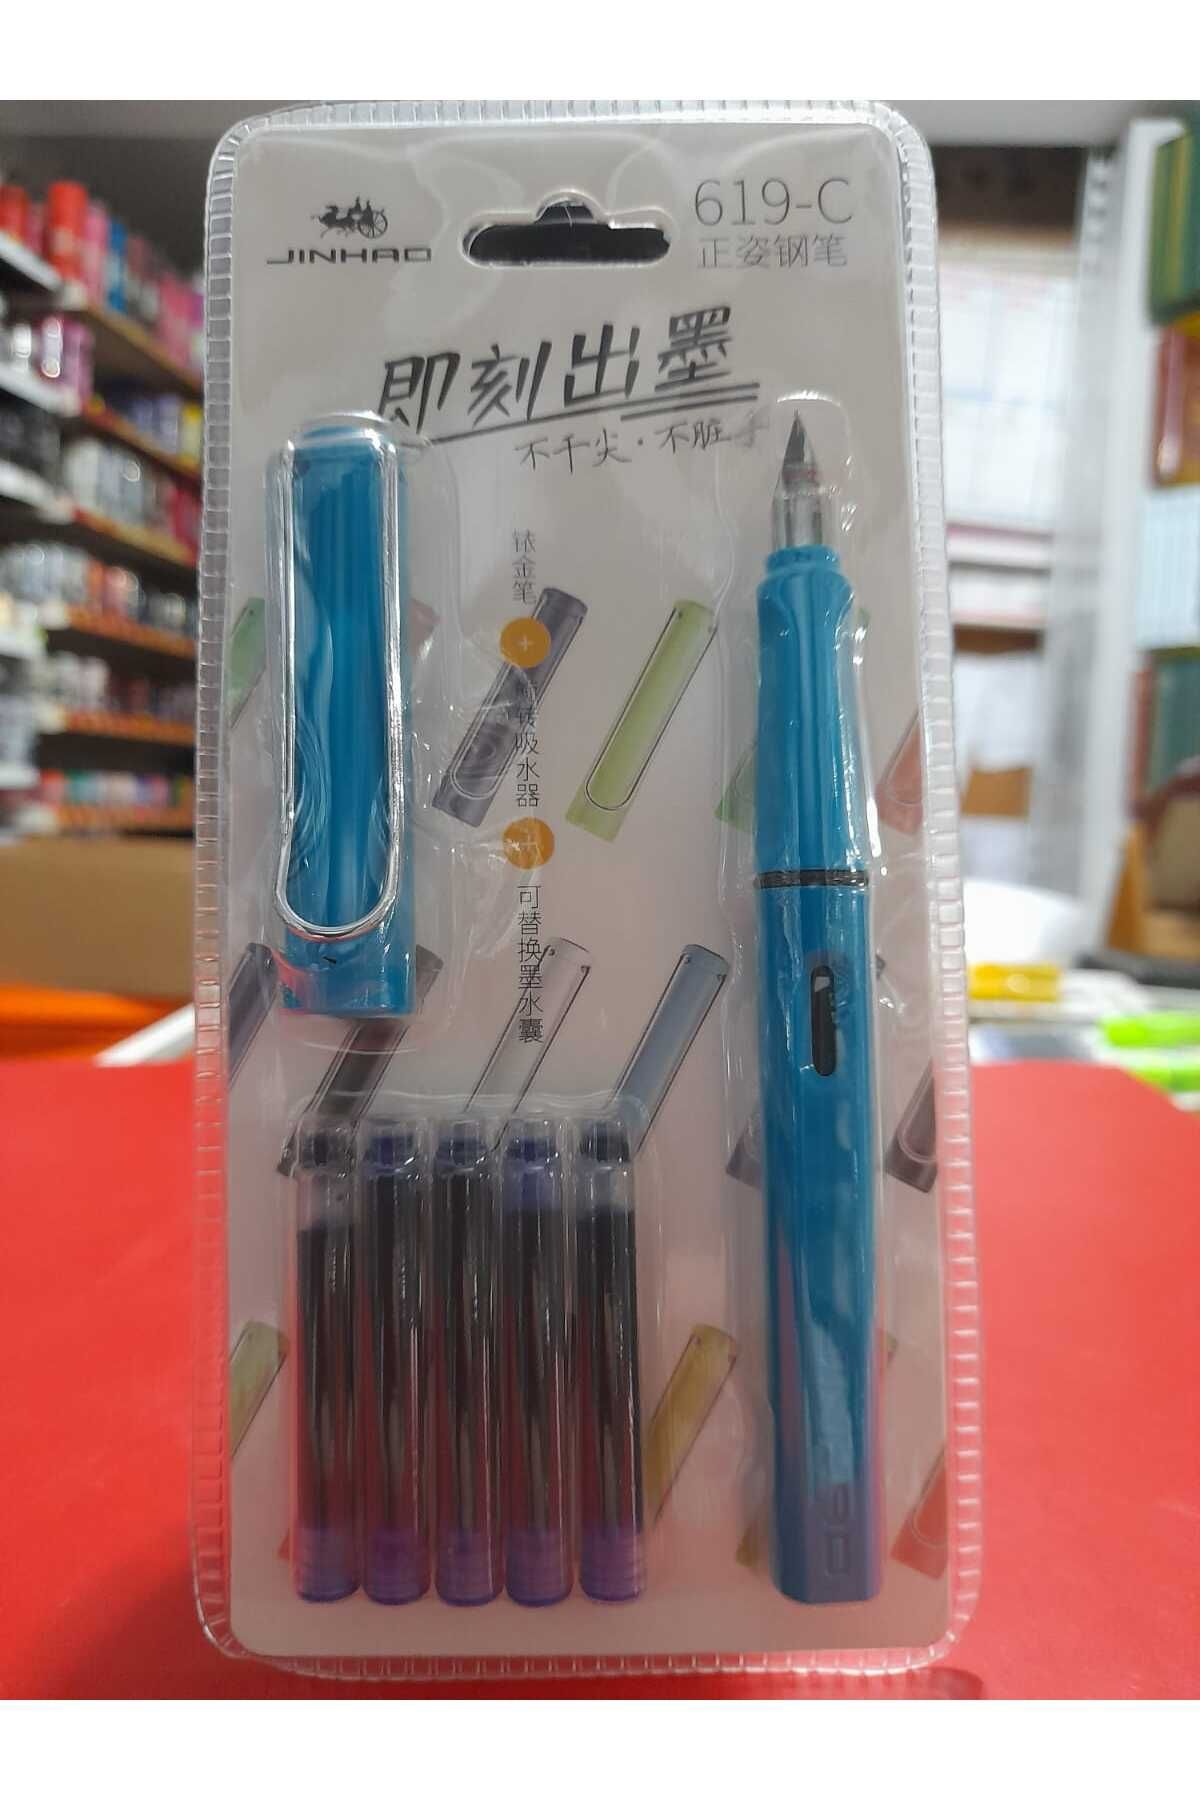 jinhao dolma kalem seti OPAK GÖVDE MAVİ renk (F) 0,60mm uç kalem+5 kartuş sert plastik gövde